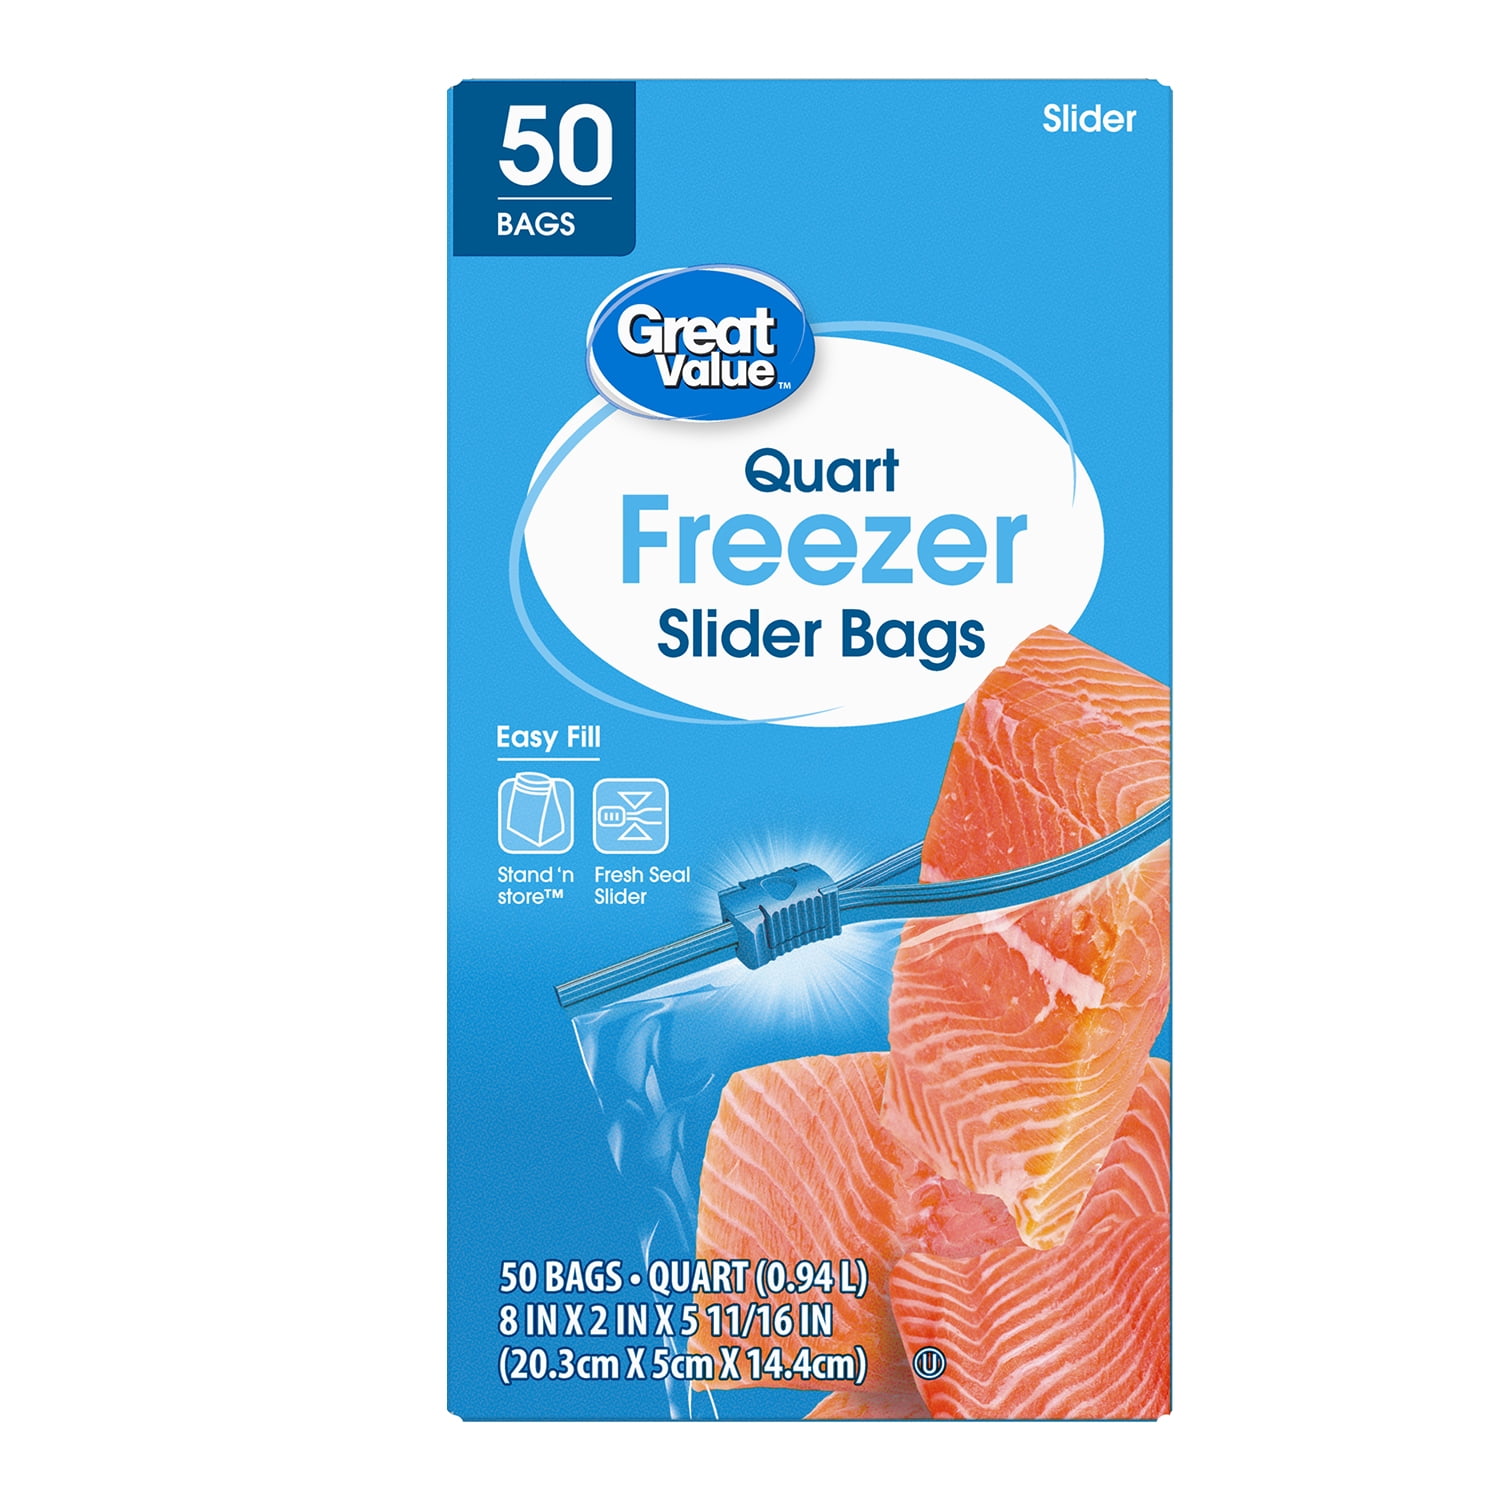 Great Value Freezer Guard Slider Zipper Bags, Quart Freezer, 50 Count